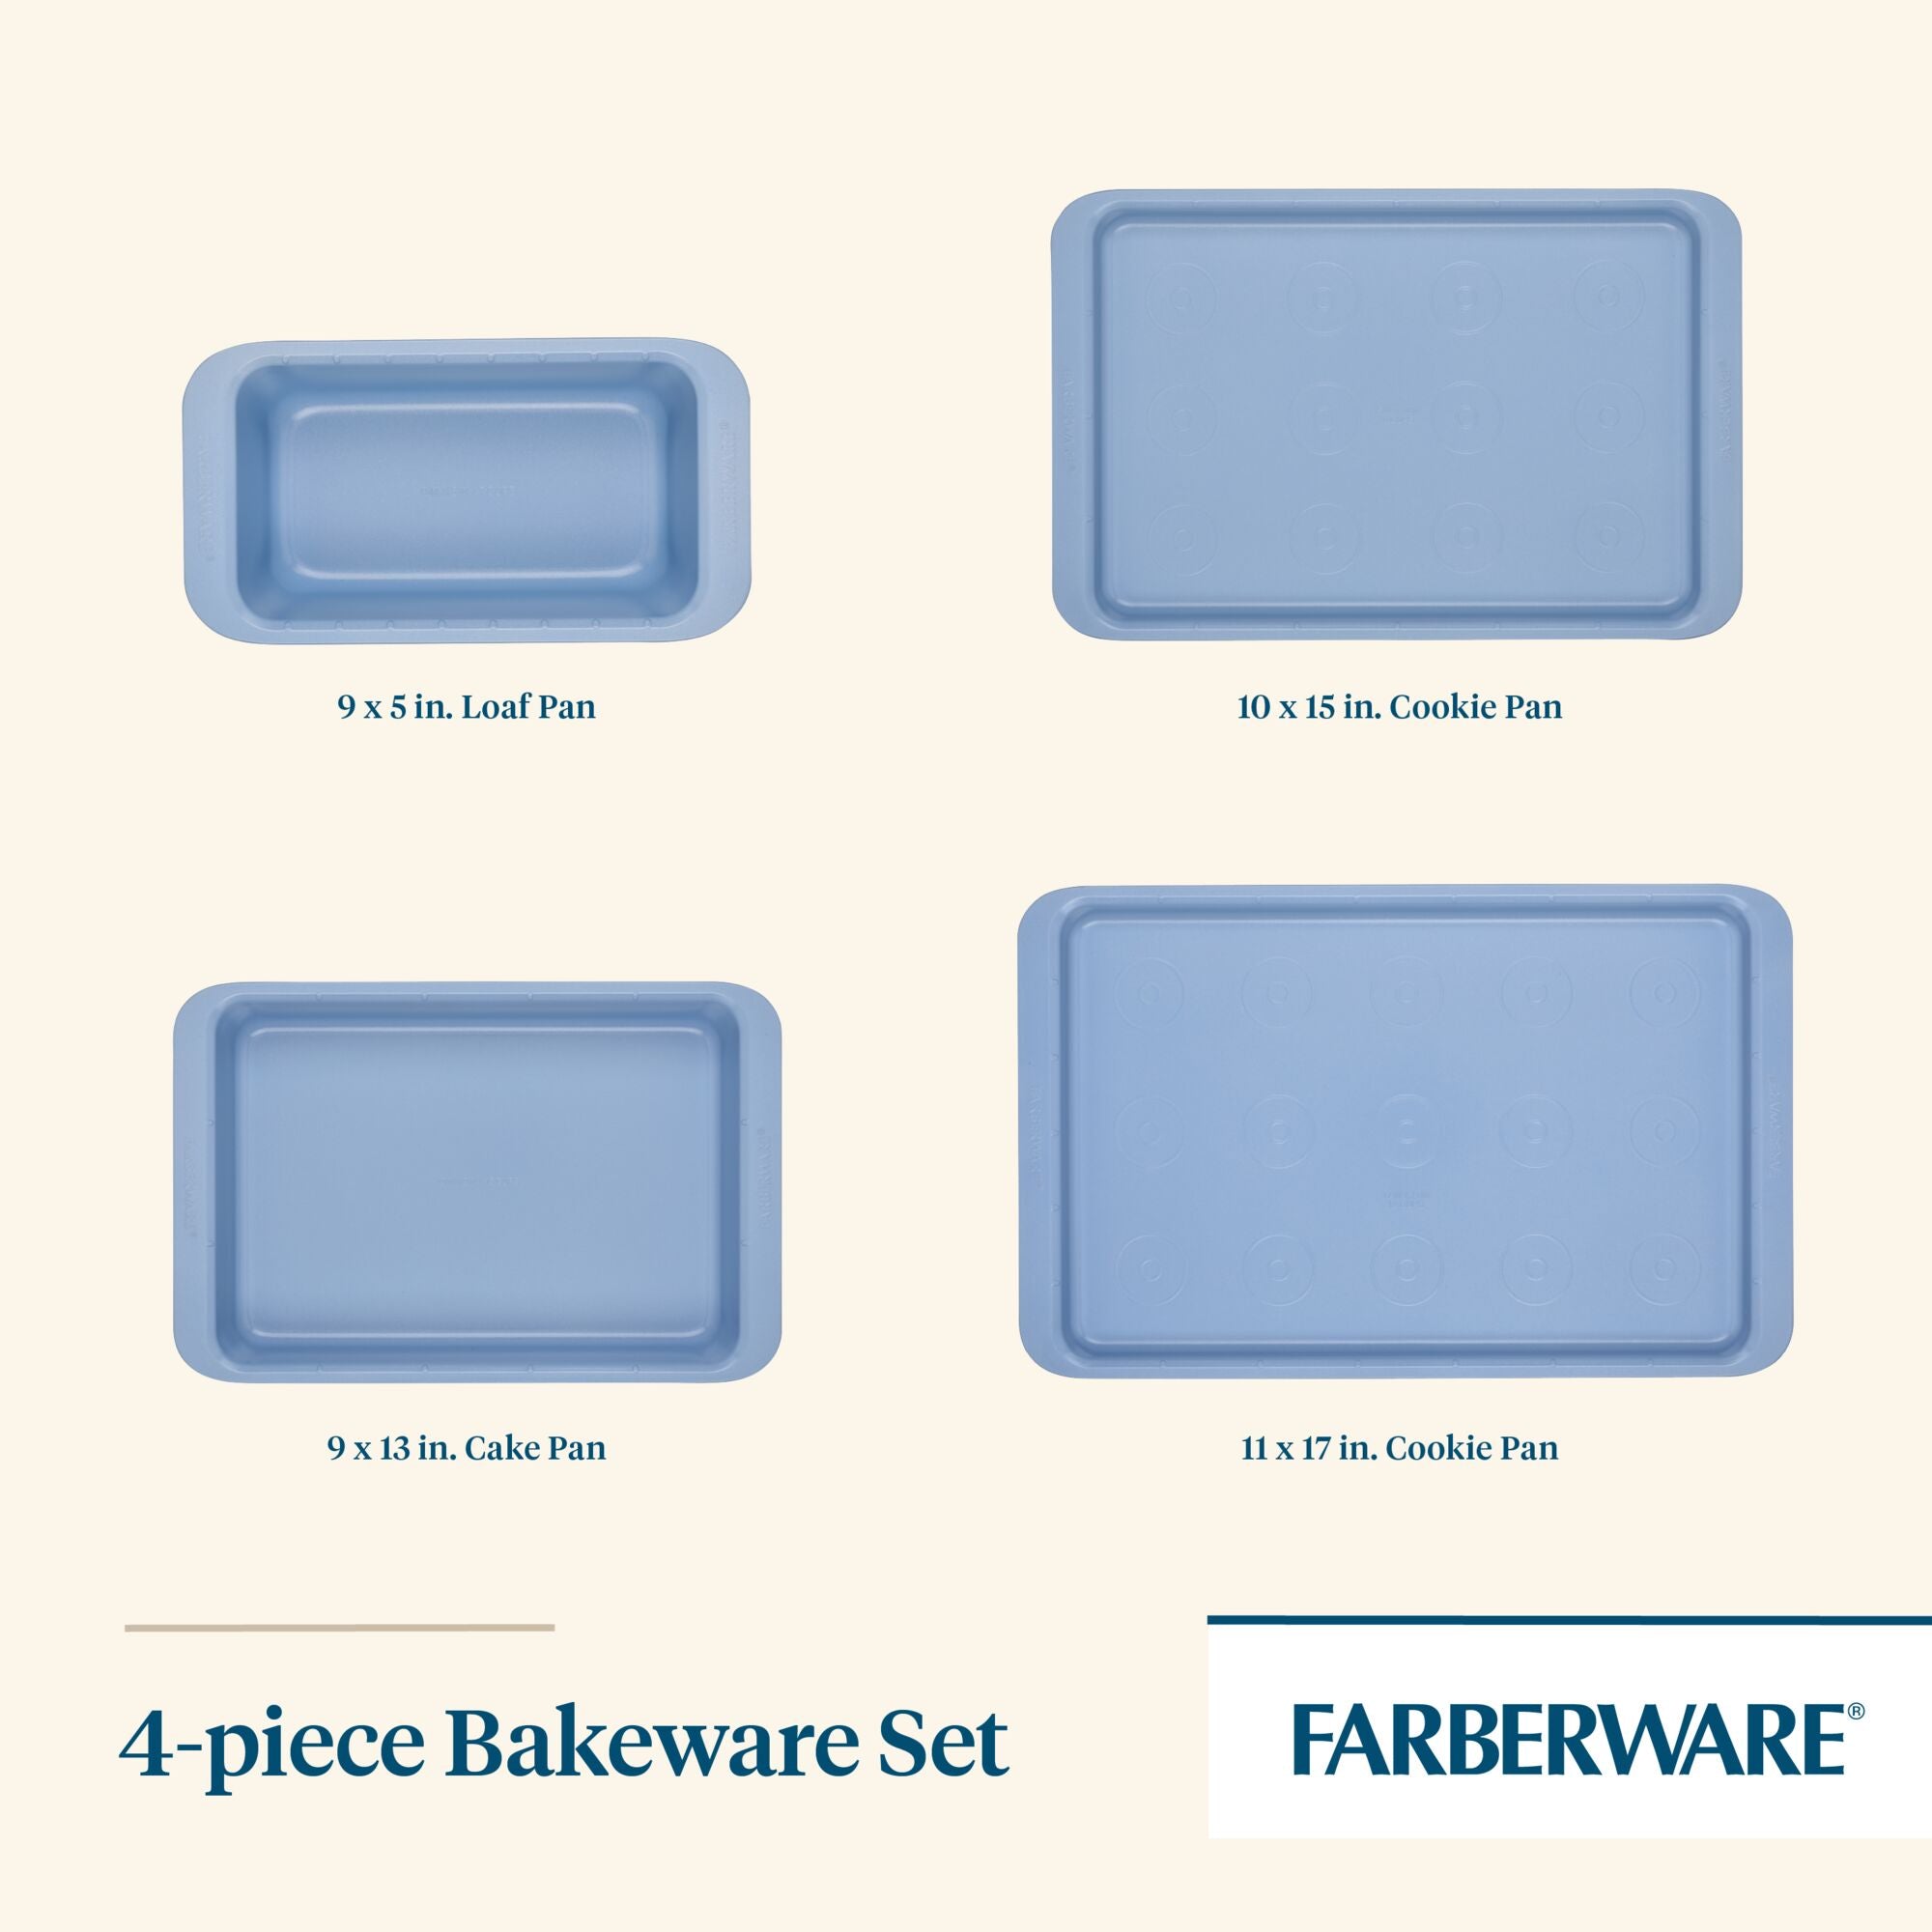 Farberware Nonstick 4-Piece Bakeware Set